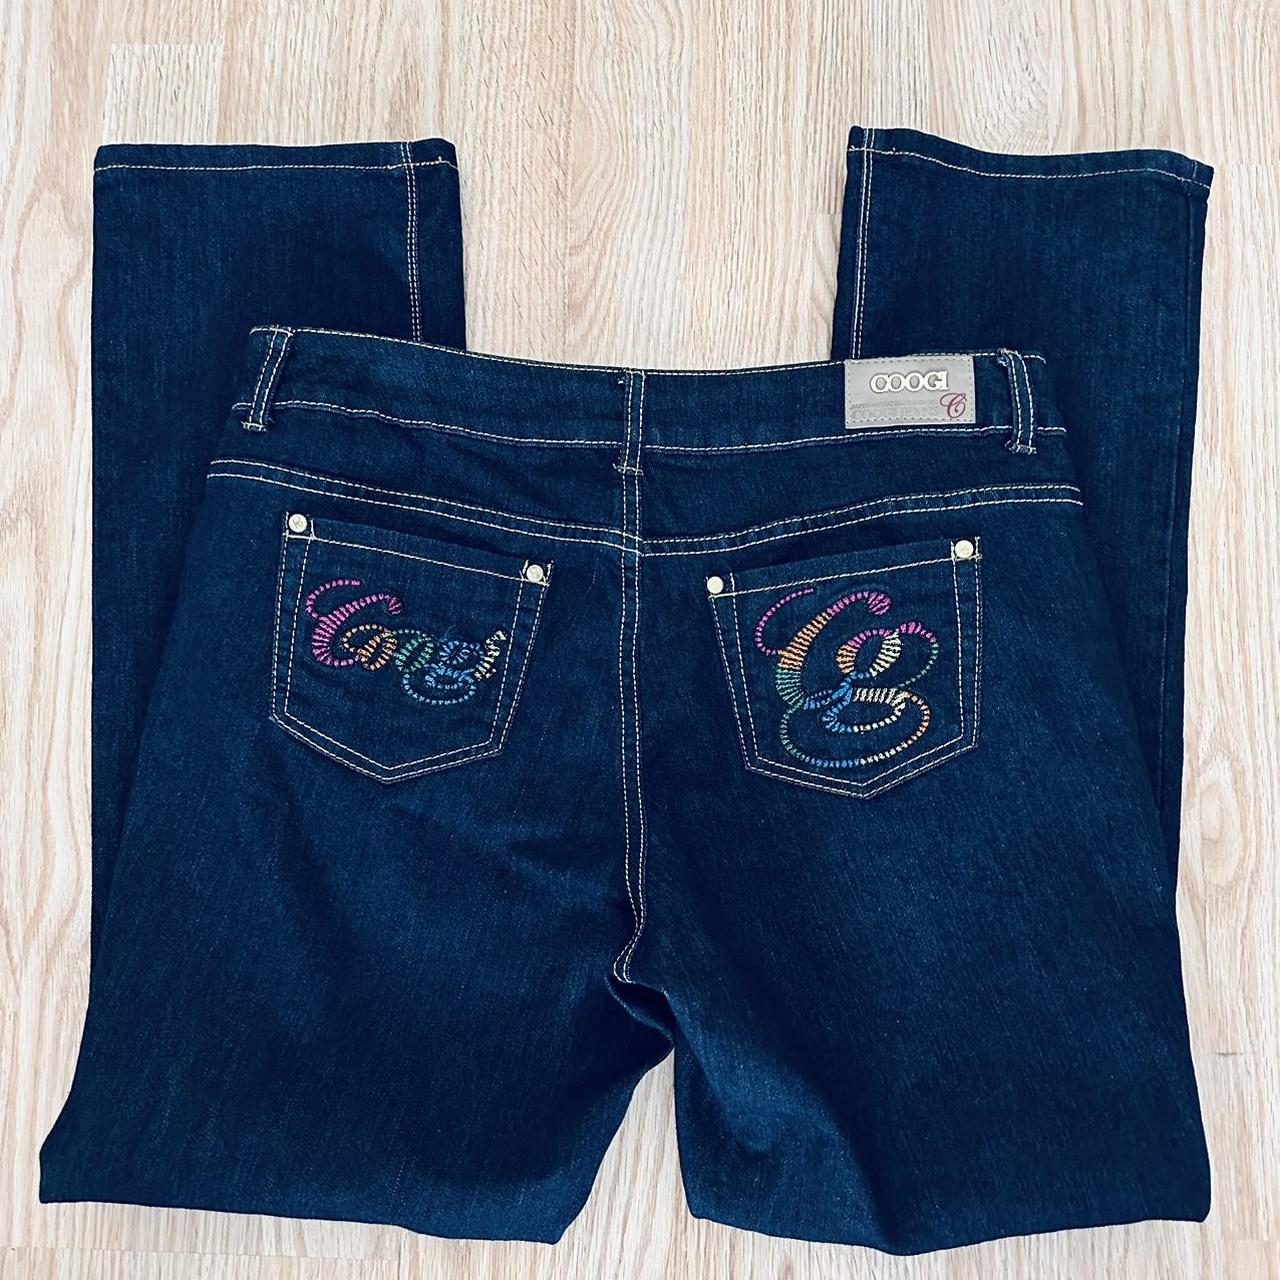 Coogi Women's Navy Jeans (4)